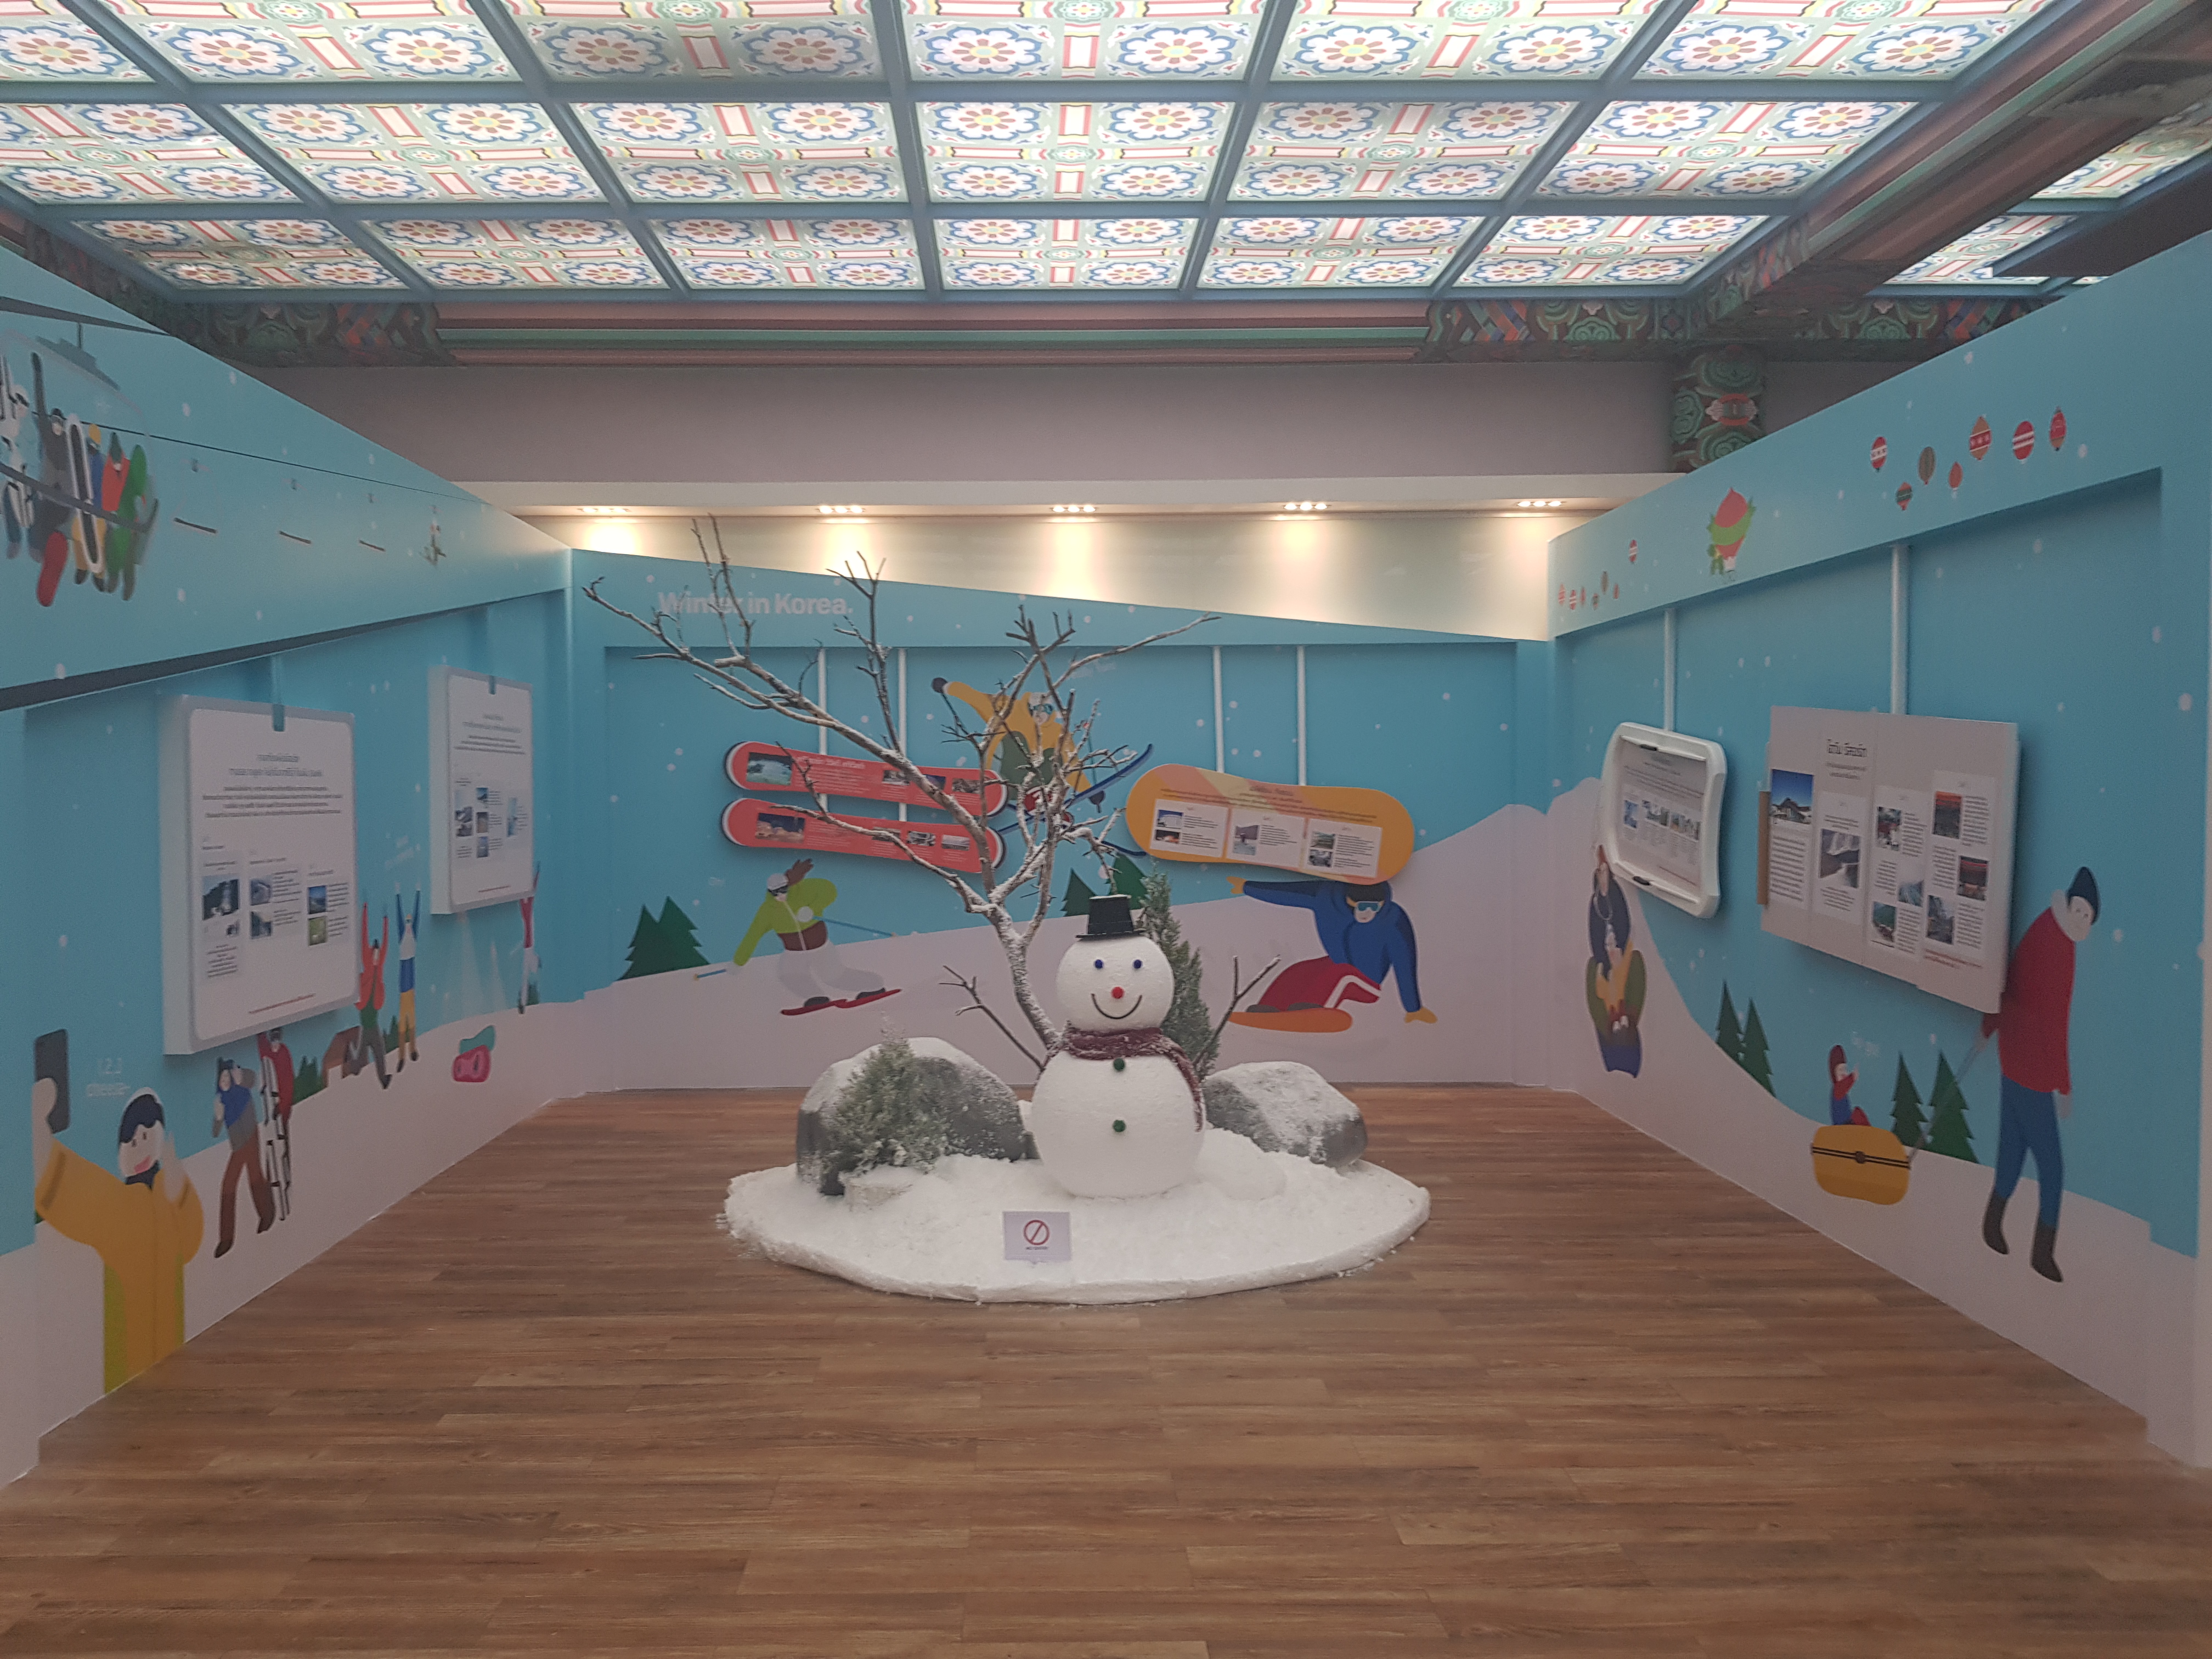 KCC (Korean Cultural Center) Winter Exhibition Project